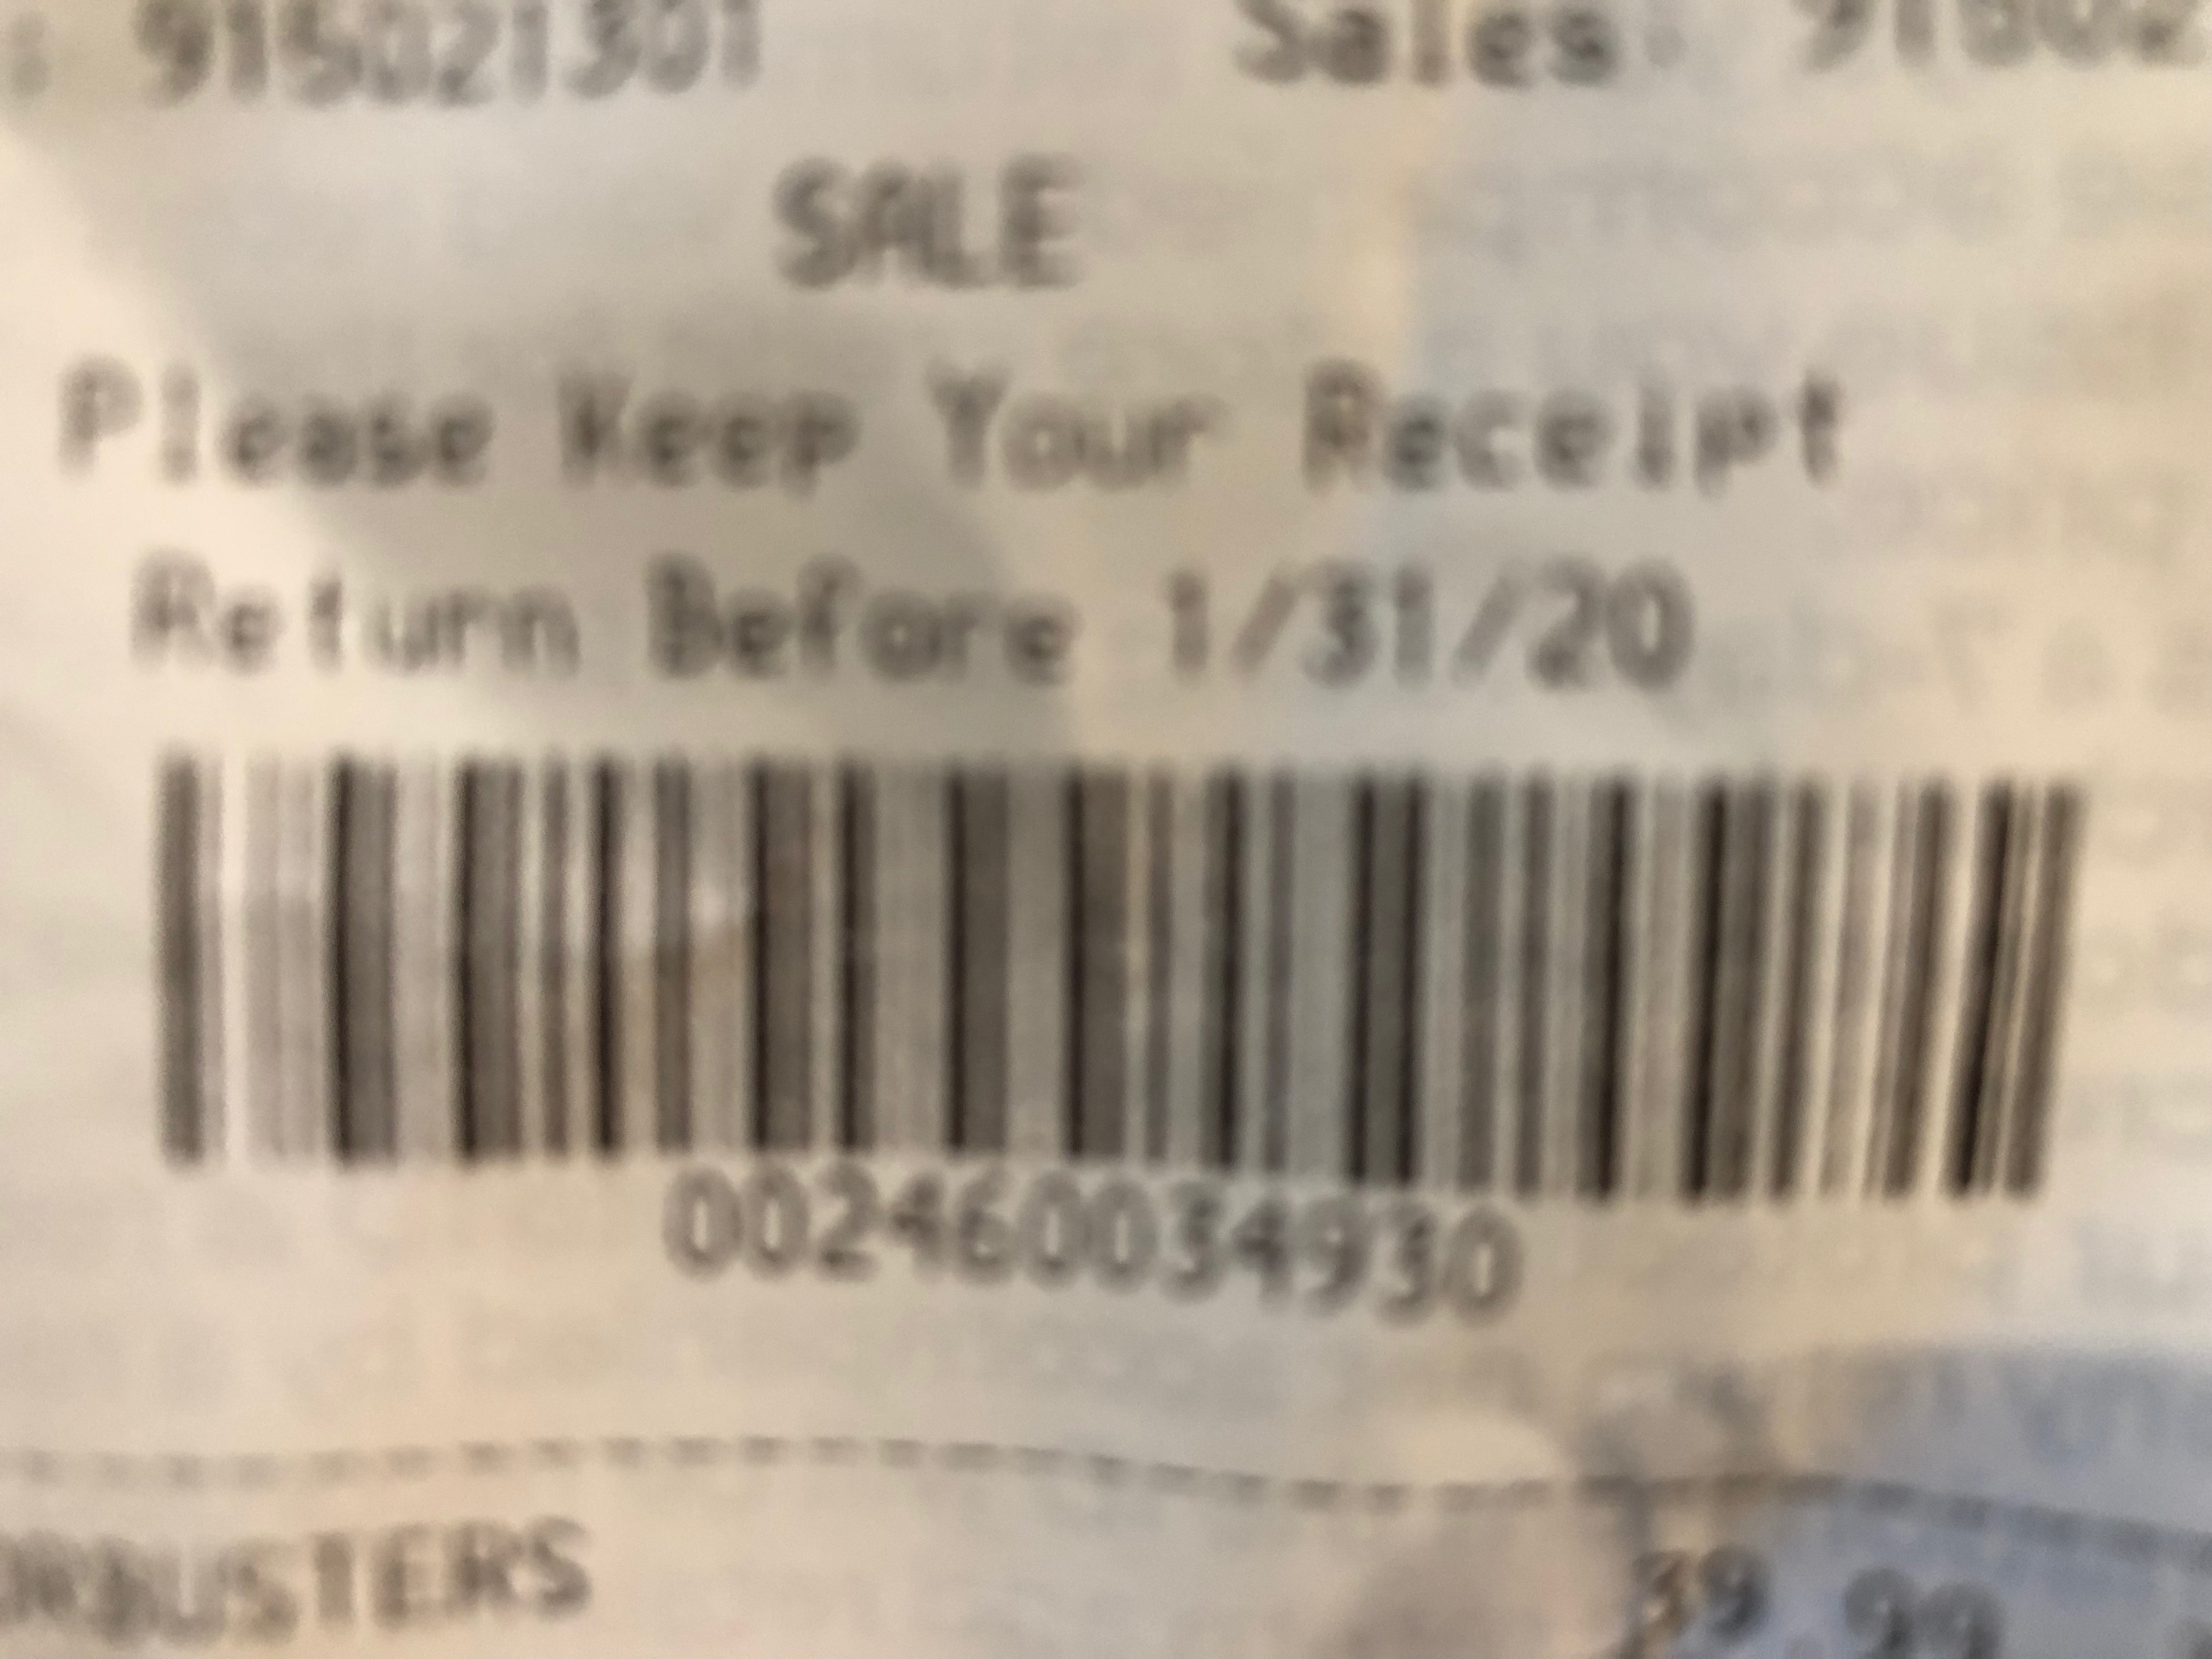 Stein Mart Reviews - Read 284 Genuine Customer Reviews